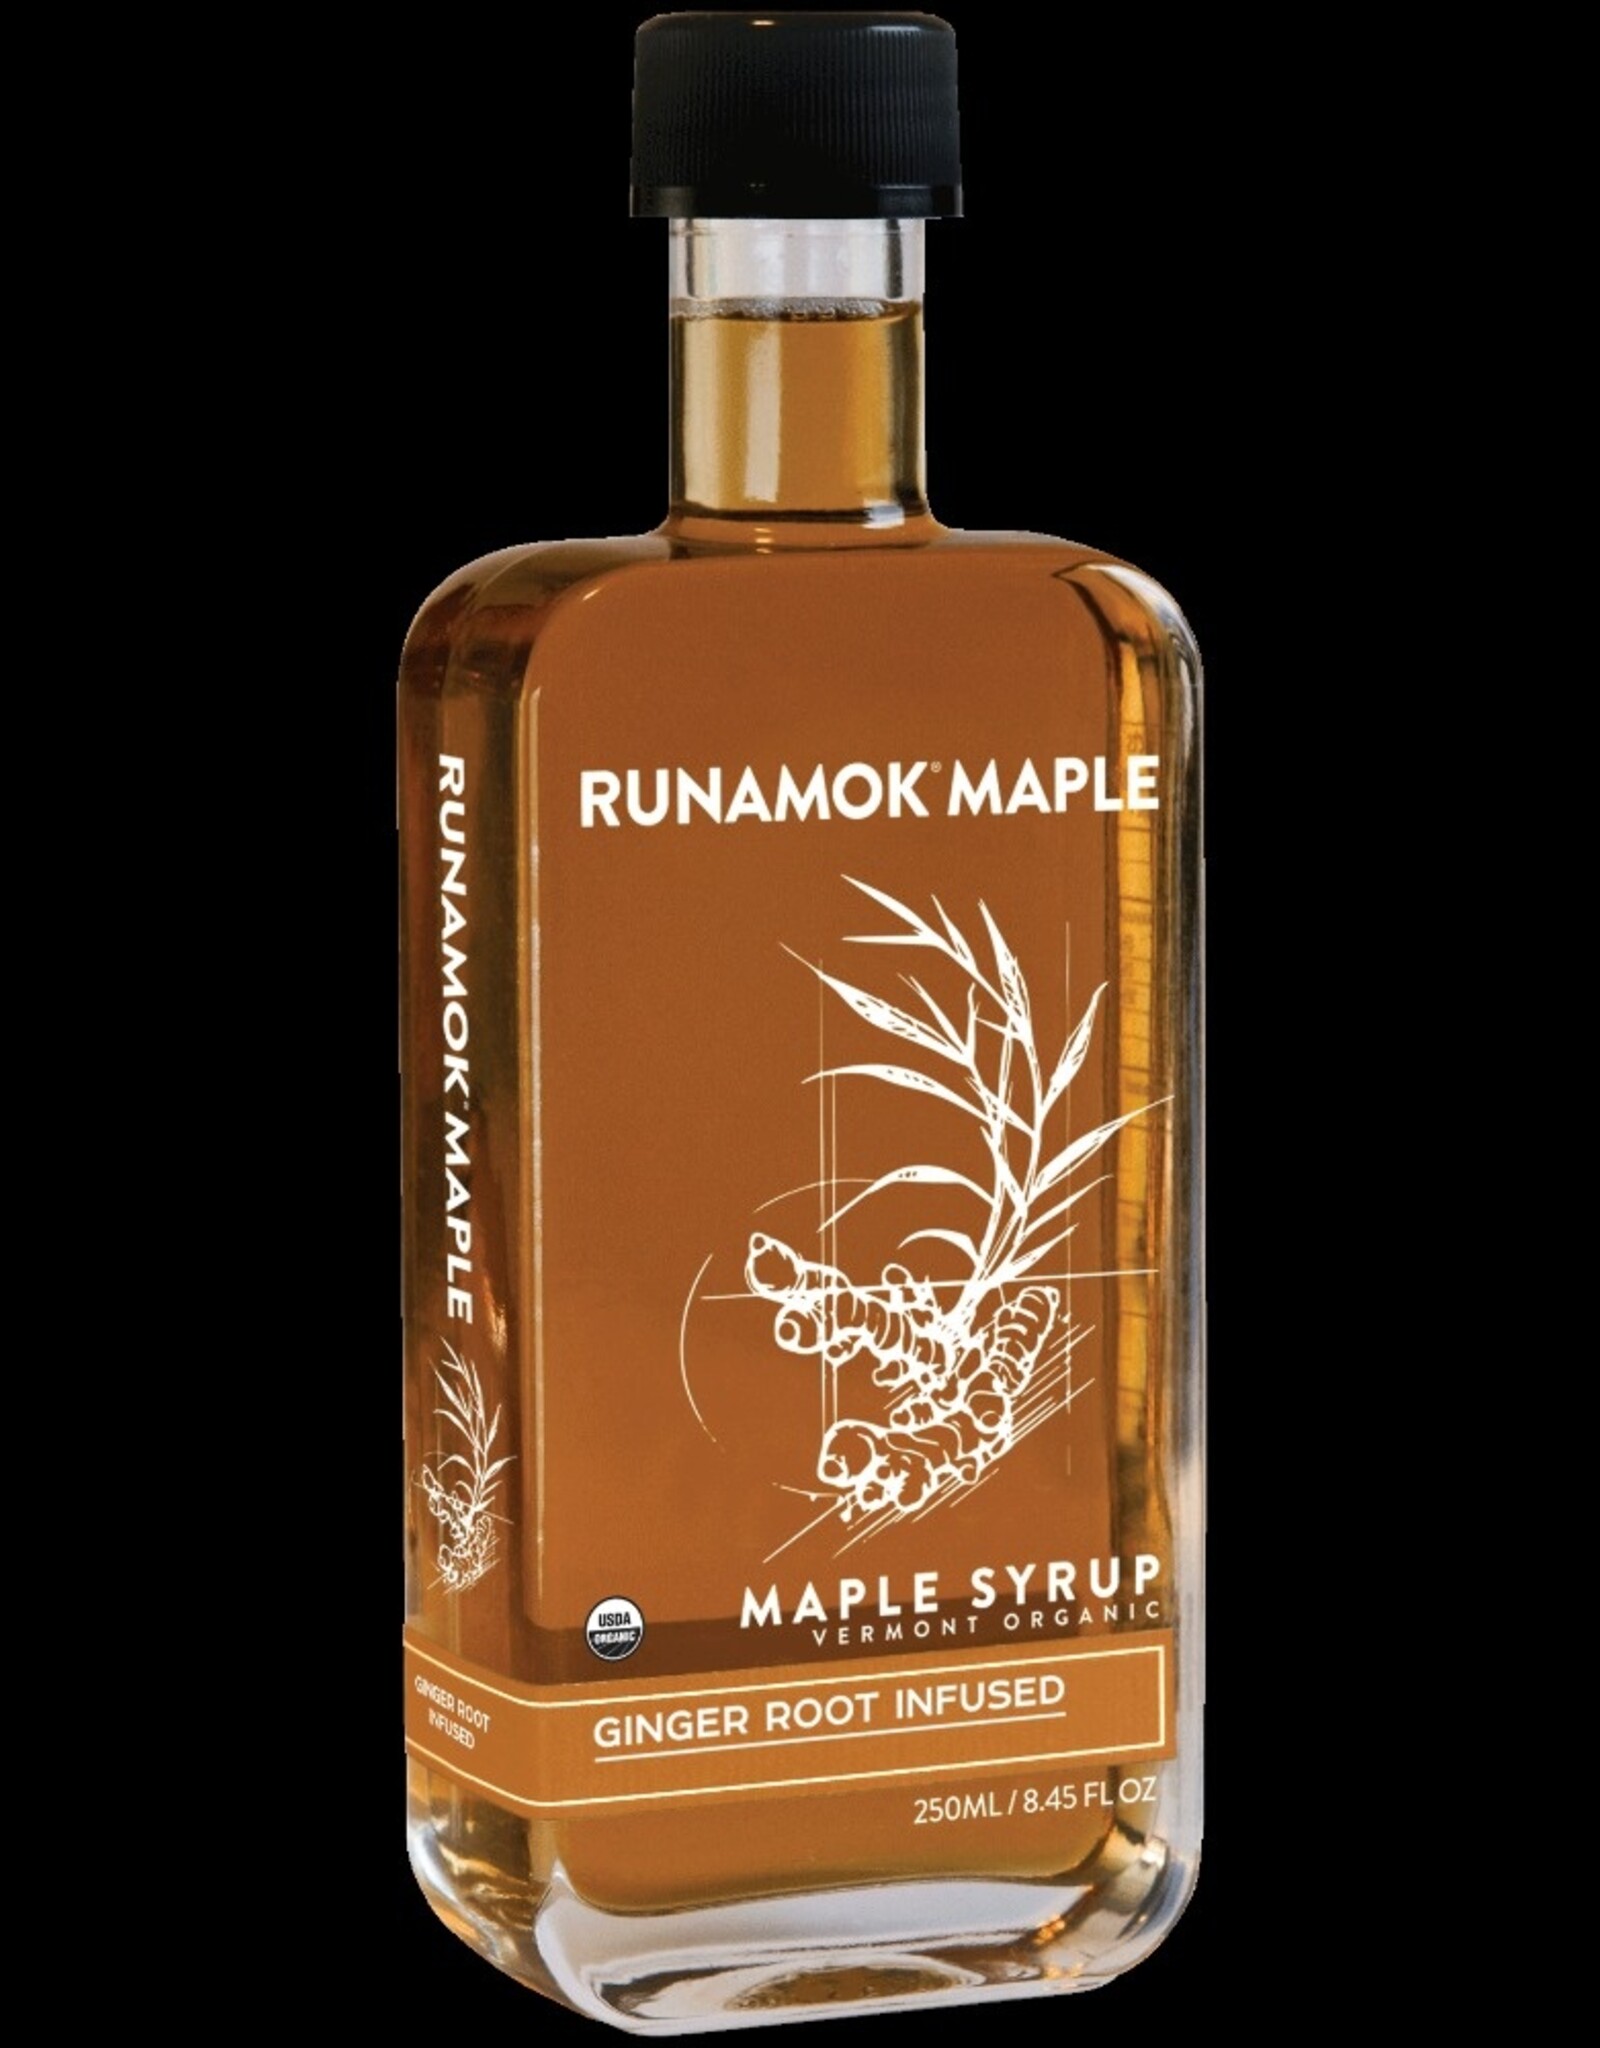 Runamok Maple Organic Ginger Infused Maple Syrup